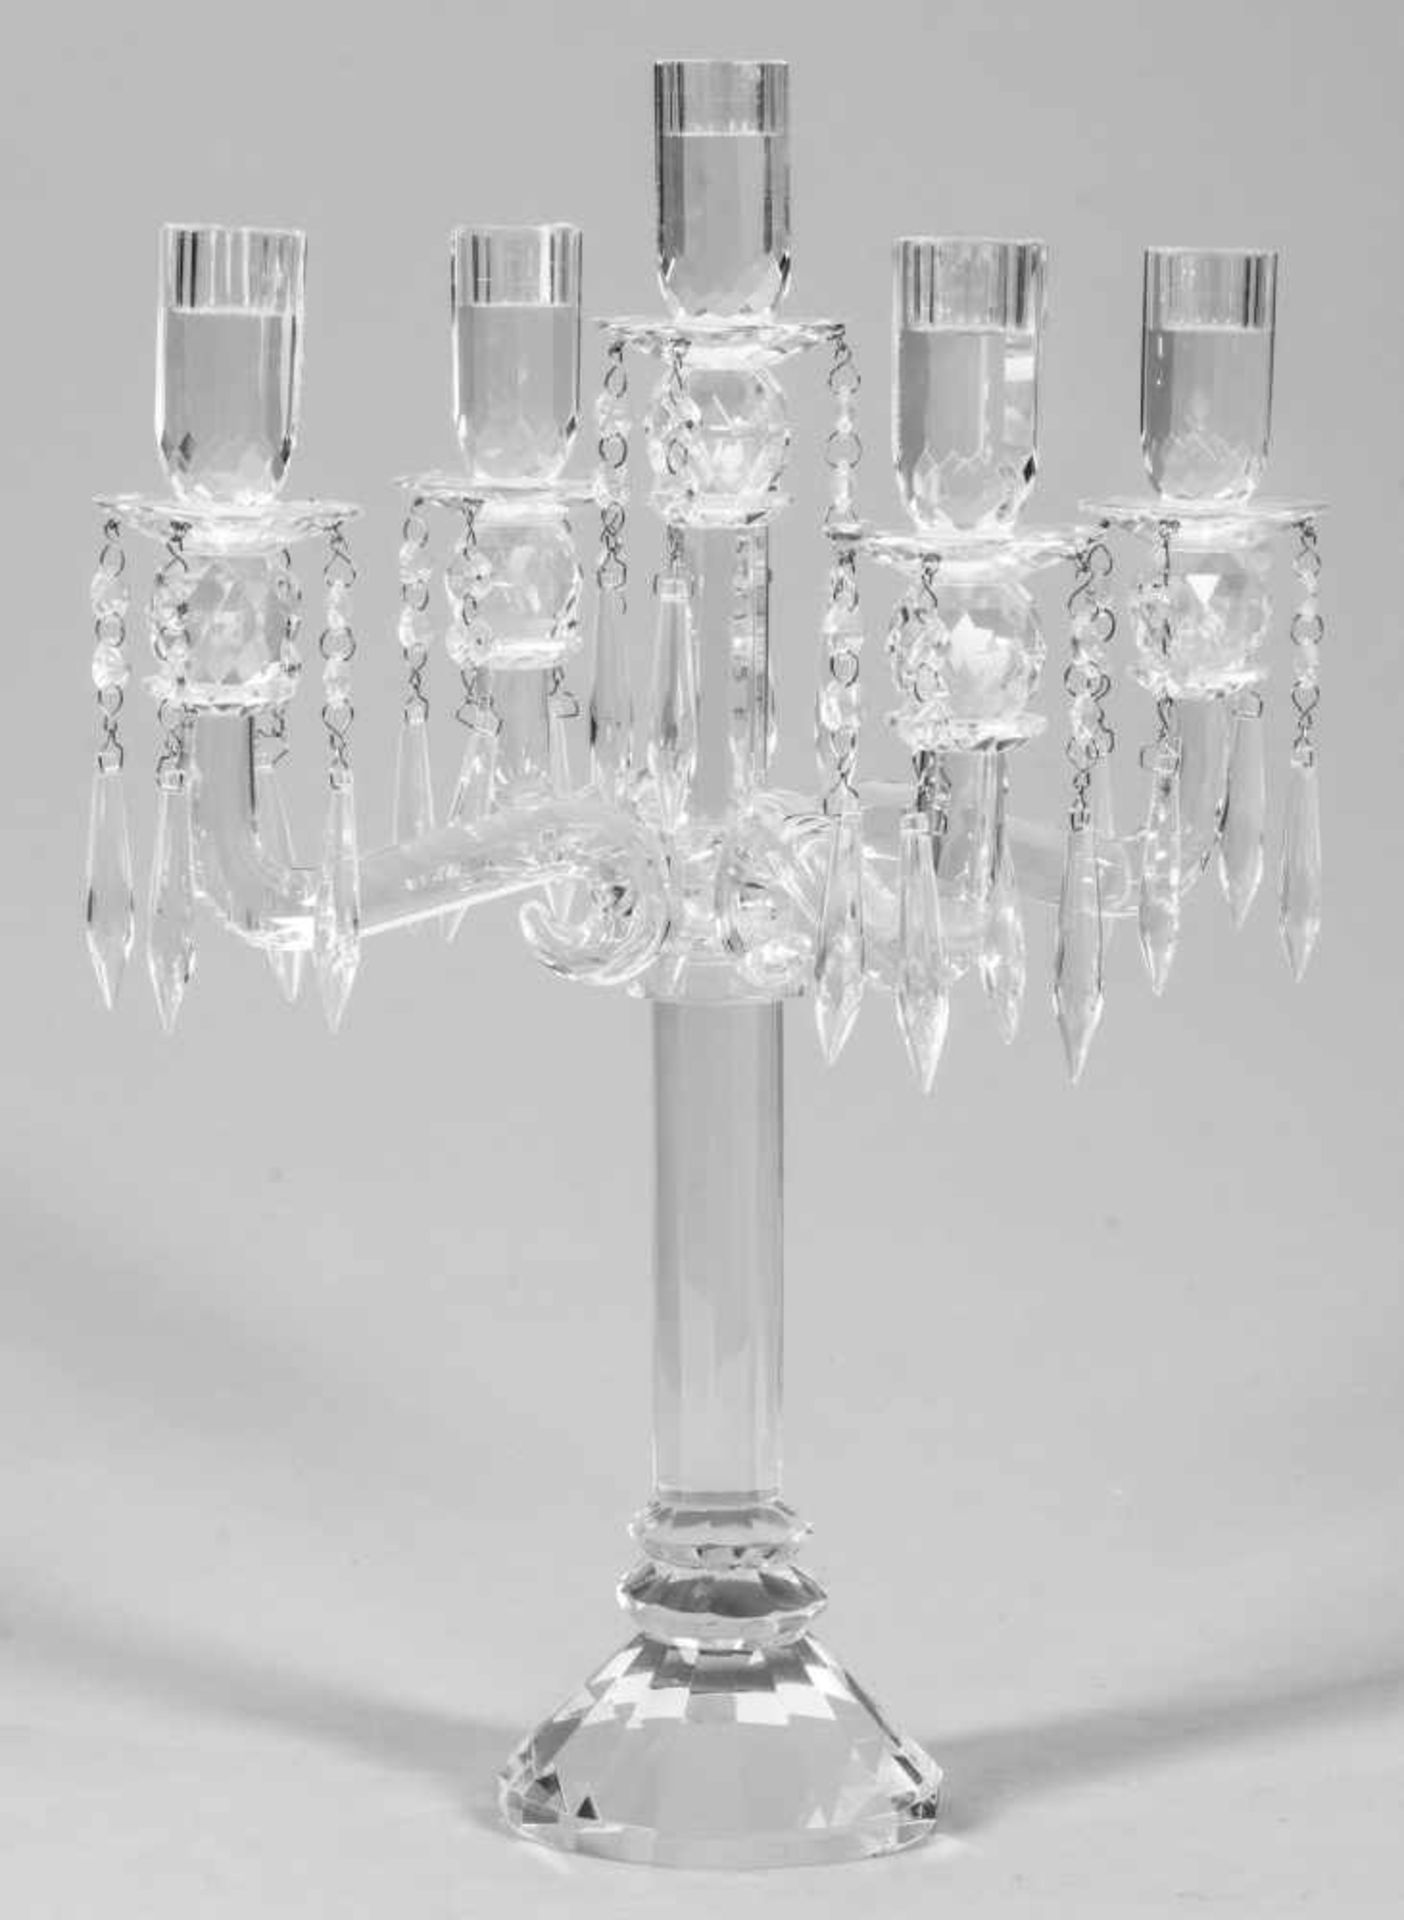 Kristall-Leuchter5-flg.; Farbloses Kristallglas, facettiert geschliffen. Kegelförmiger Fuß, - Bild 2 aus 2